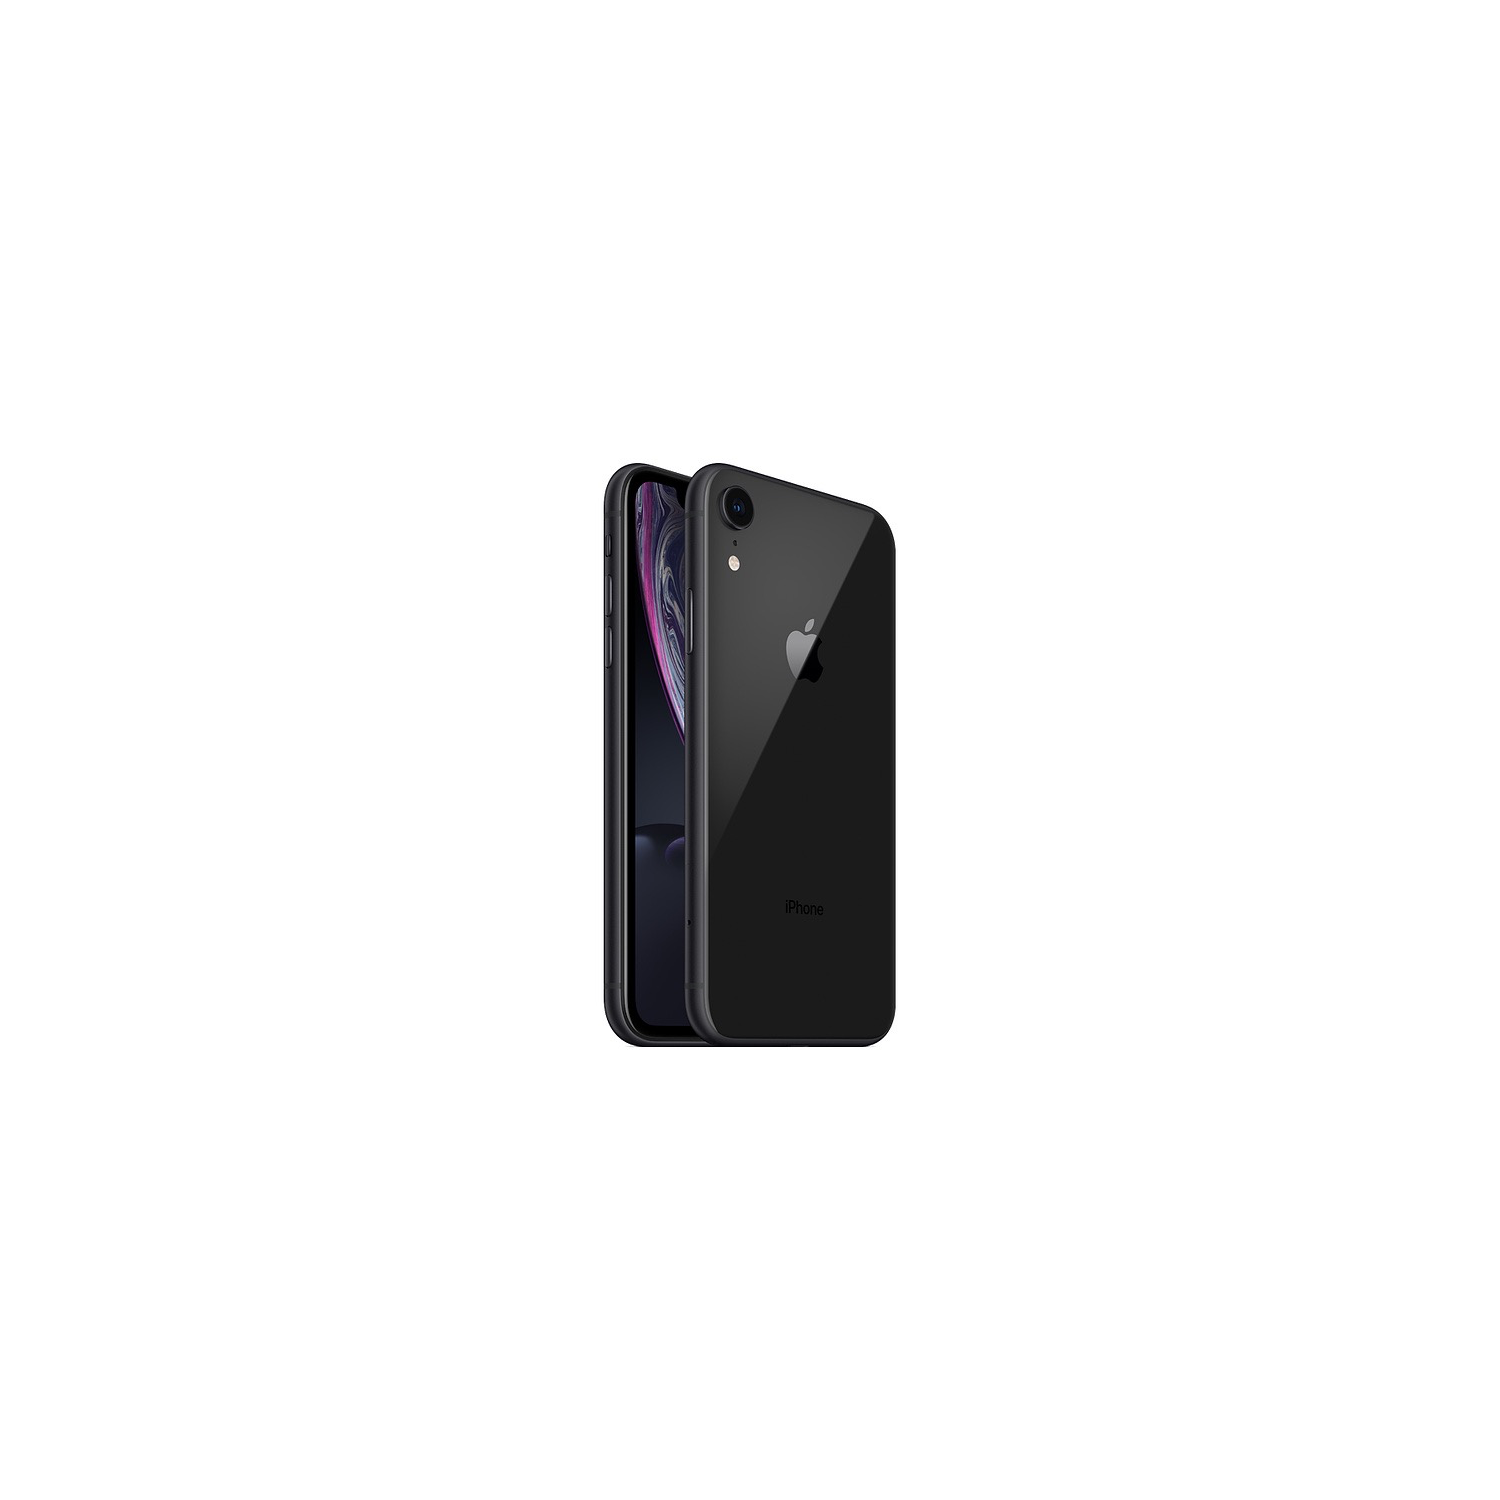 Refurbished (Excellent) - Apple iPhone XR 128GB Smartphone - Black - Unlocked - Certified Refurbished